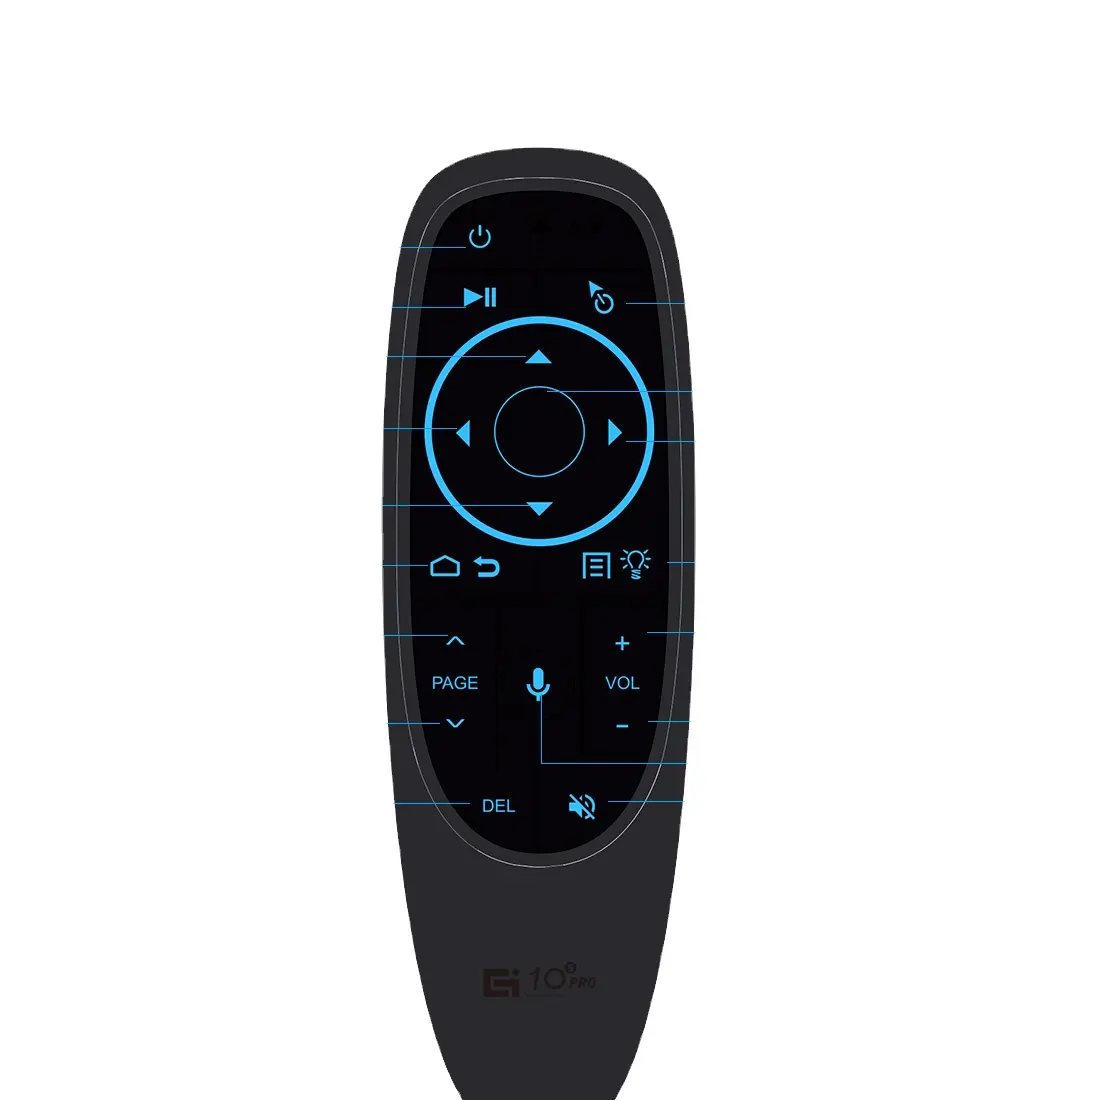 Asisten suara Mouse udara Mini nirkabel 2.4Ghz, mikrofon kontrol & belajar TV Android untuk komputer PC Android TV